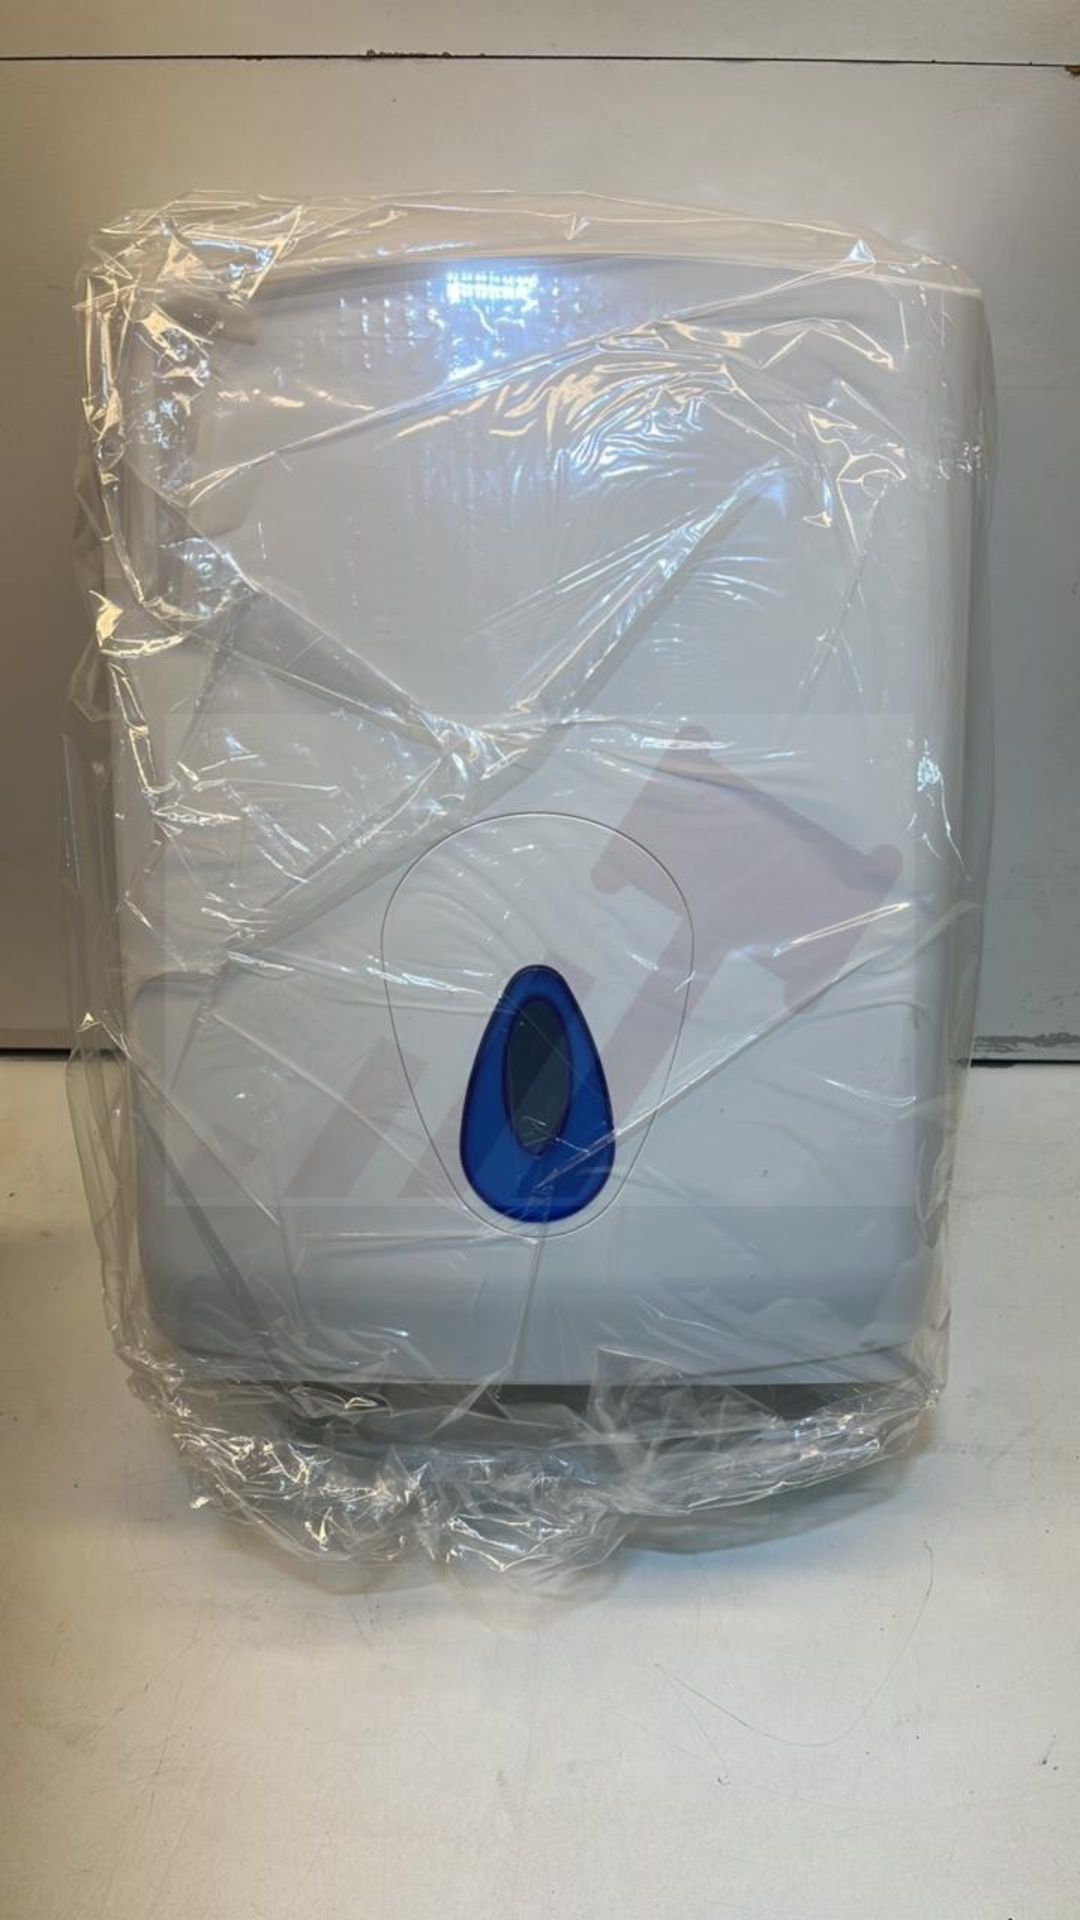 Modular Large Hand Towel Dispenser Base Unit - Image 2 of 2